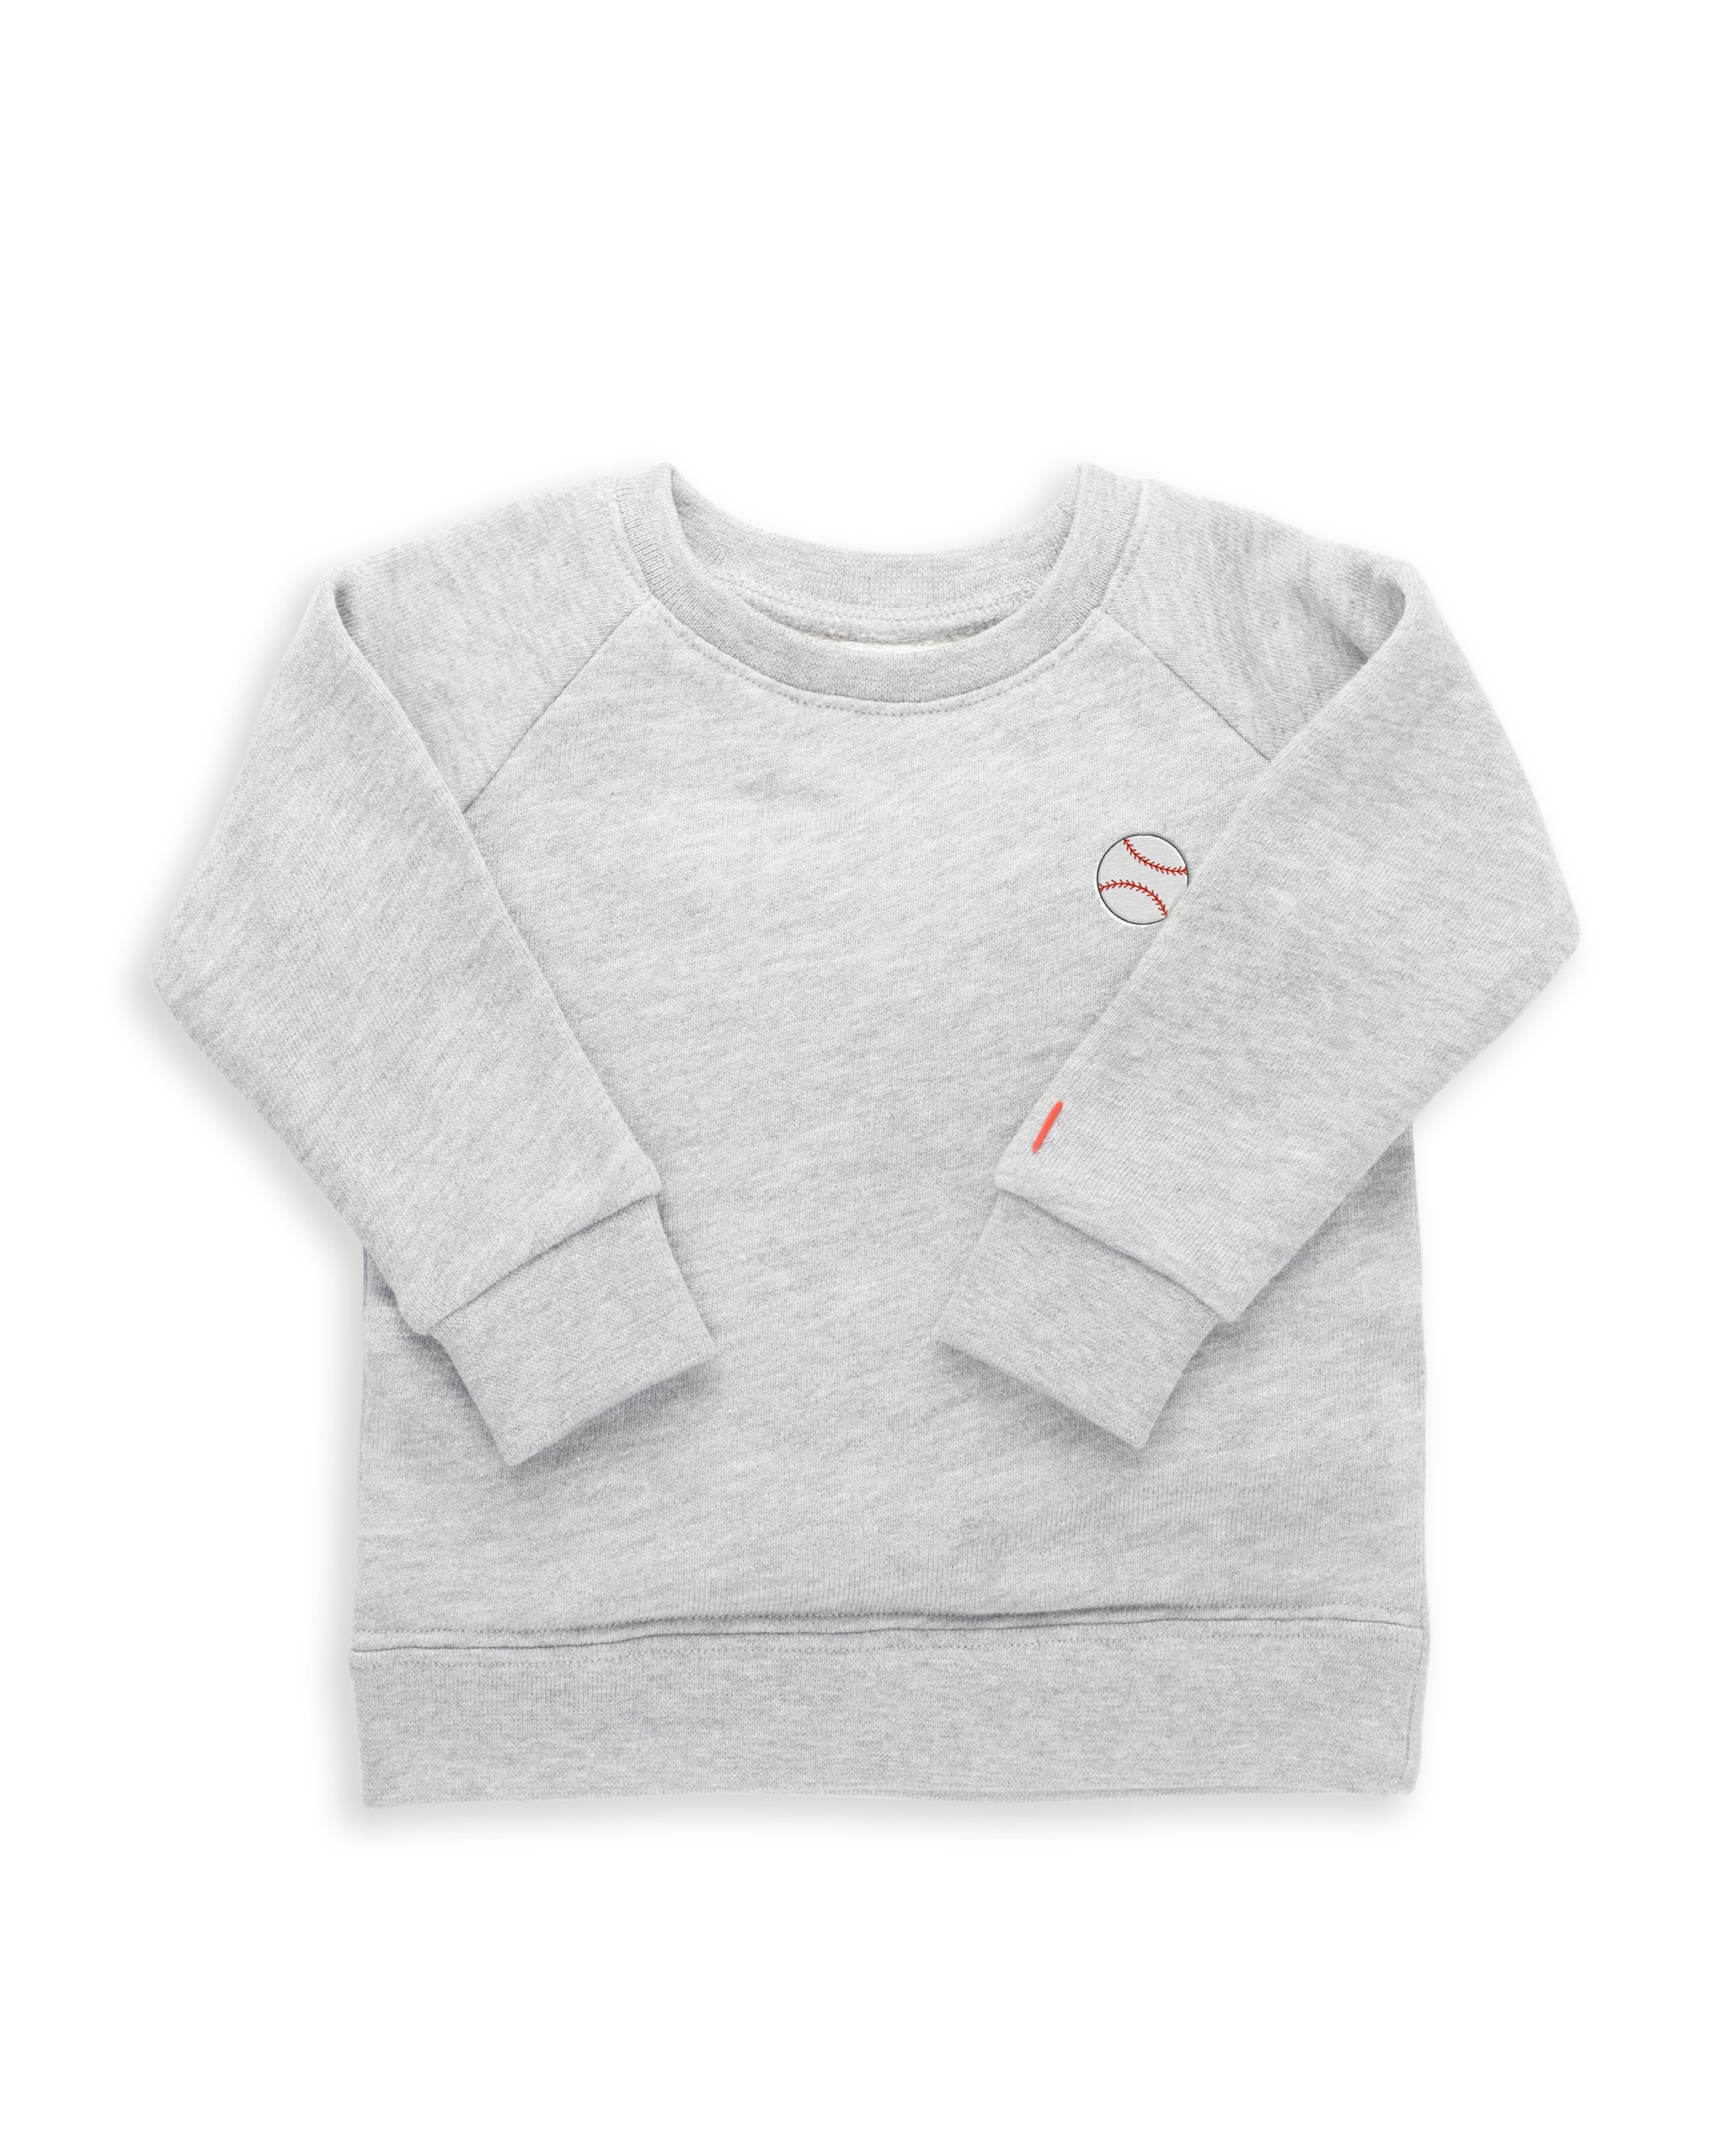 The Organic Embroidered Pullover Sweatshirt [Heather Grey Baseball]